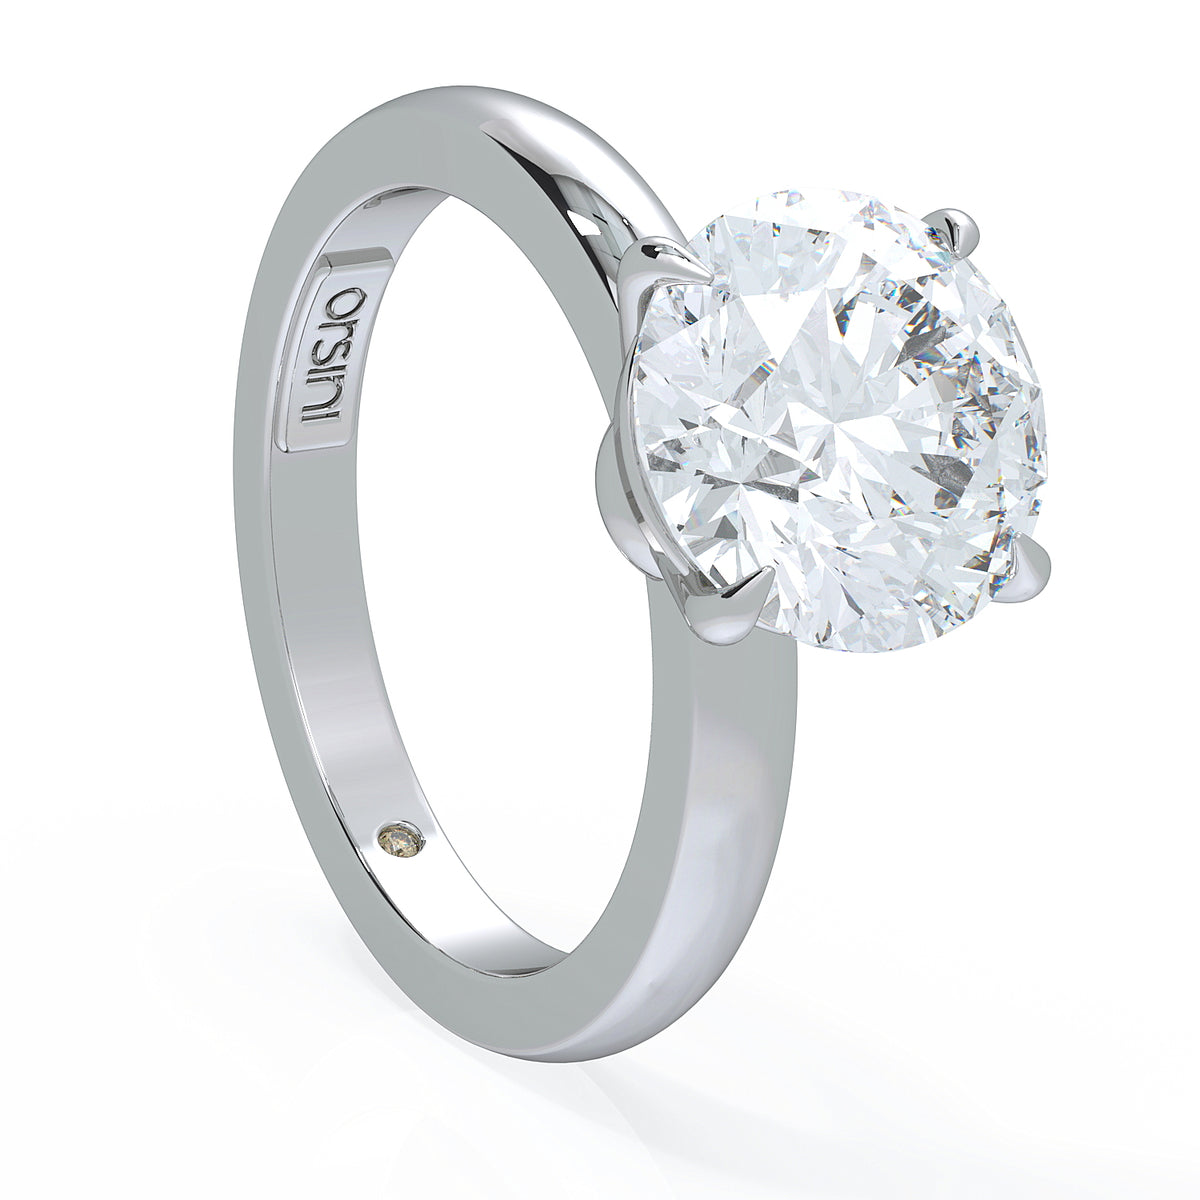 Orsini Grande Engagement Ring